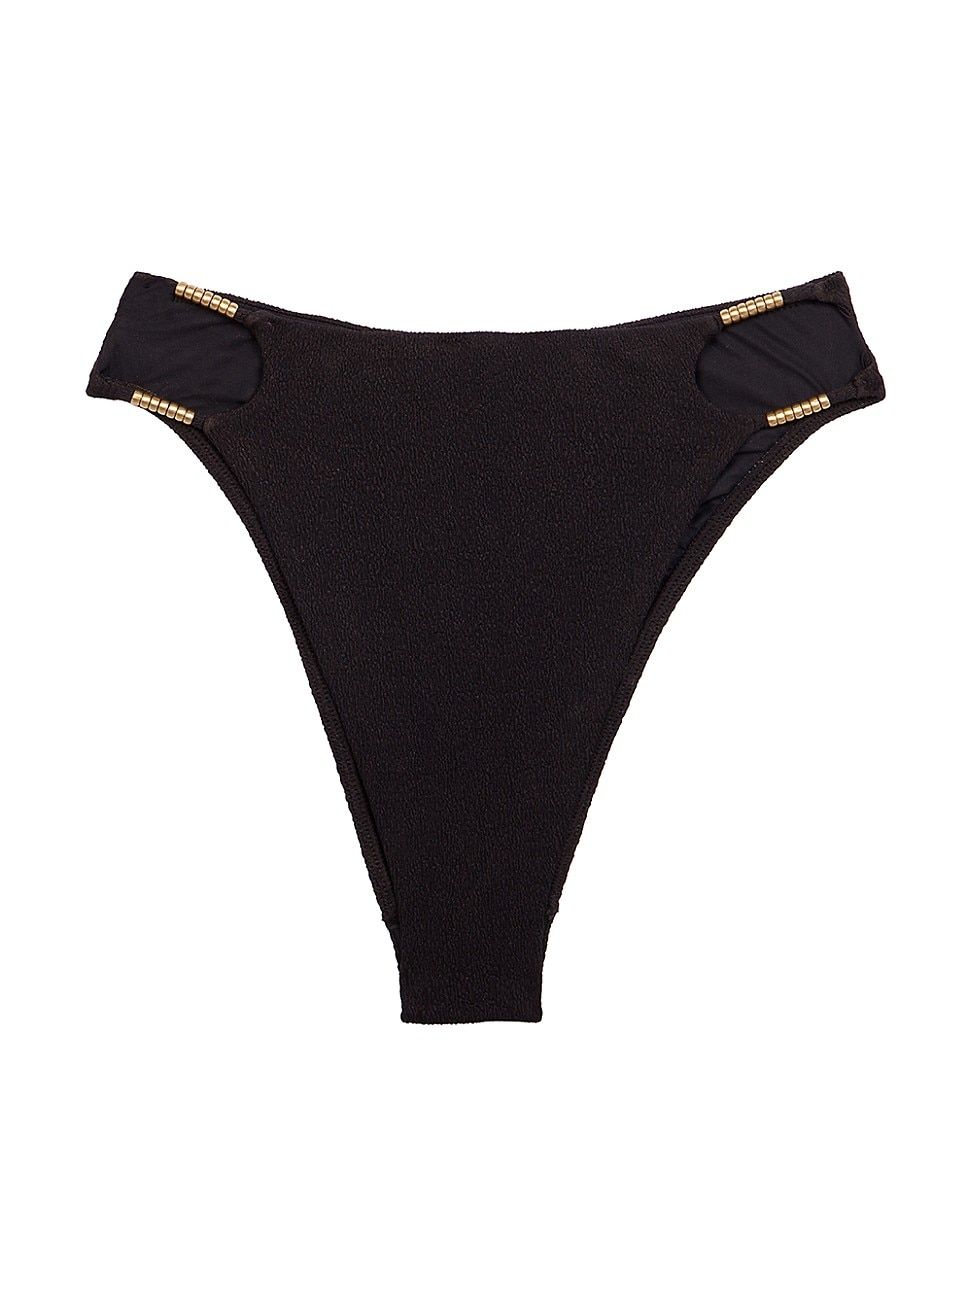 Firenze Black Bikini Bottom | Saks Fifth Avenue